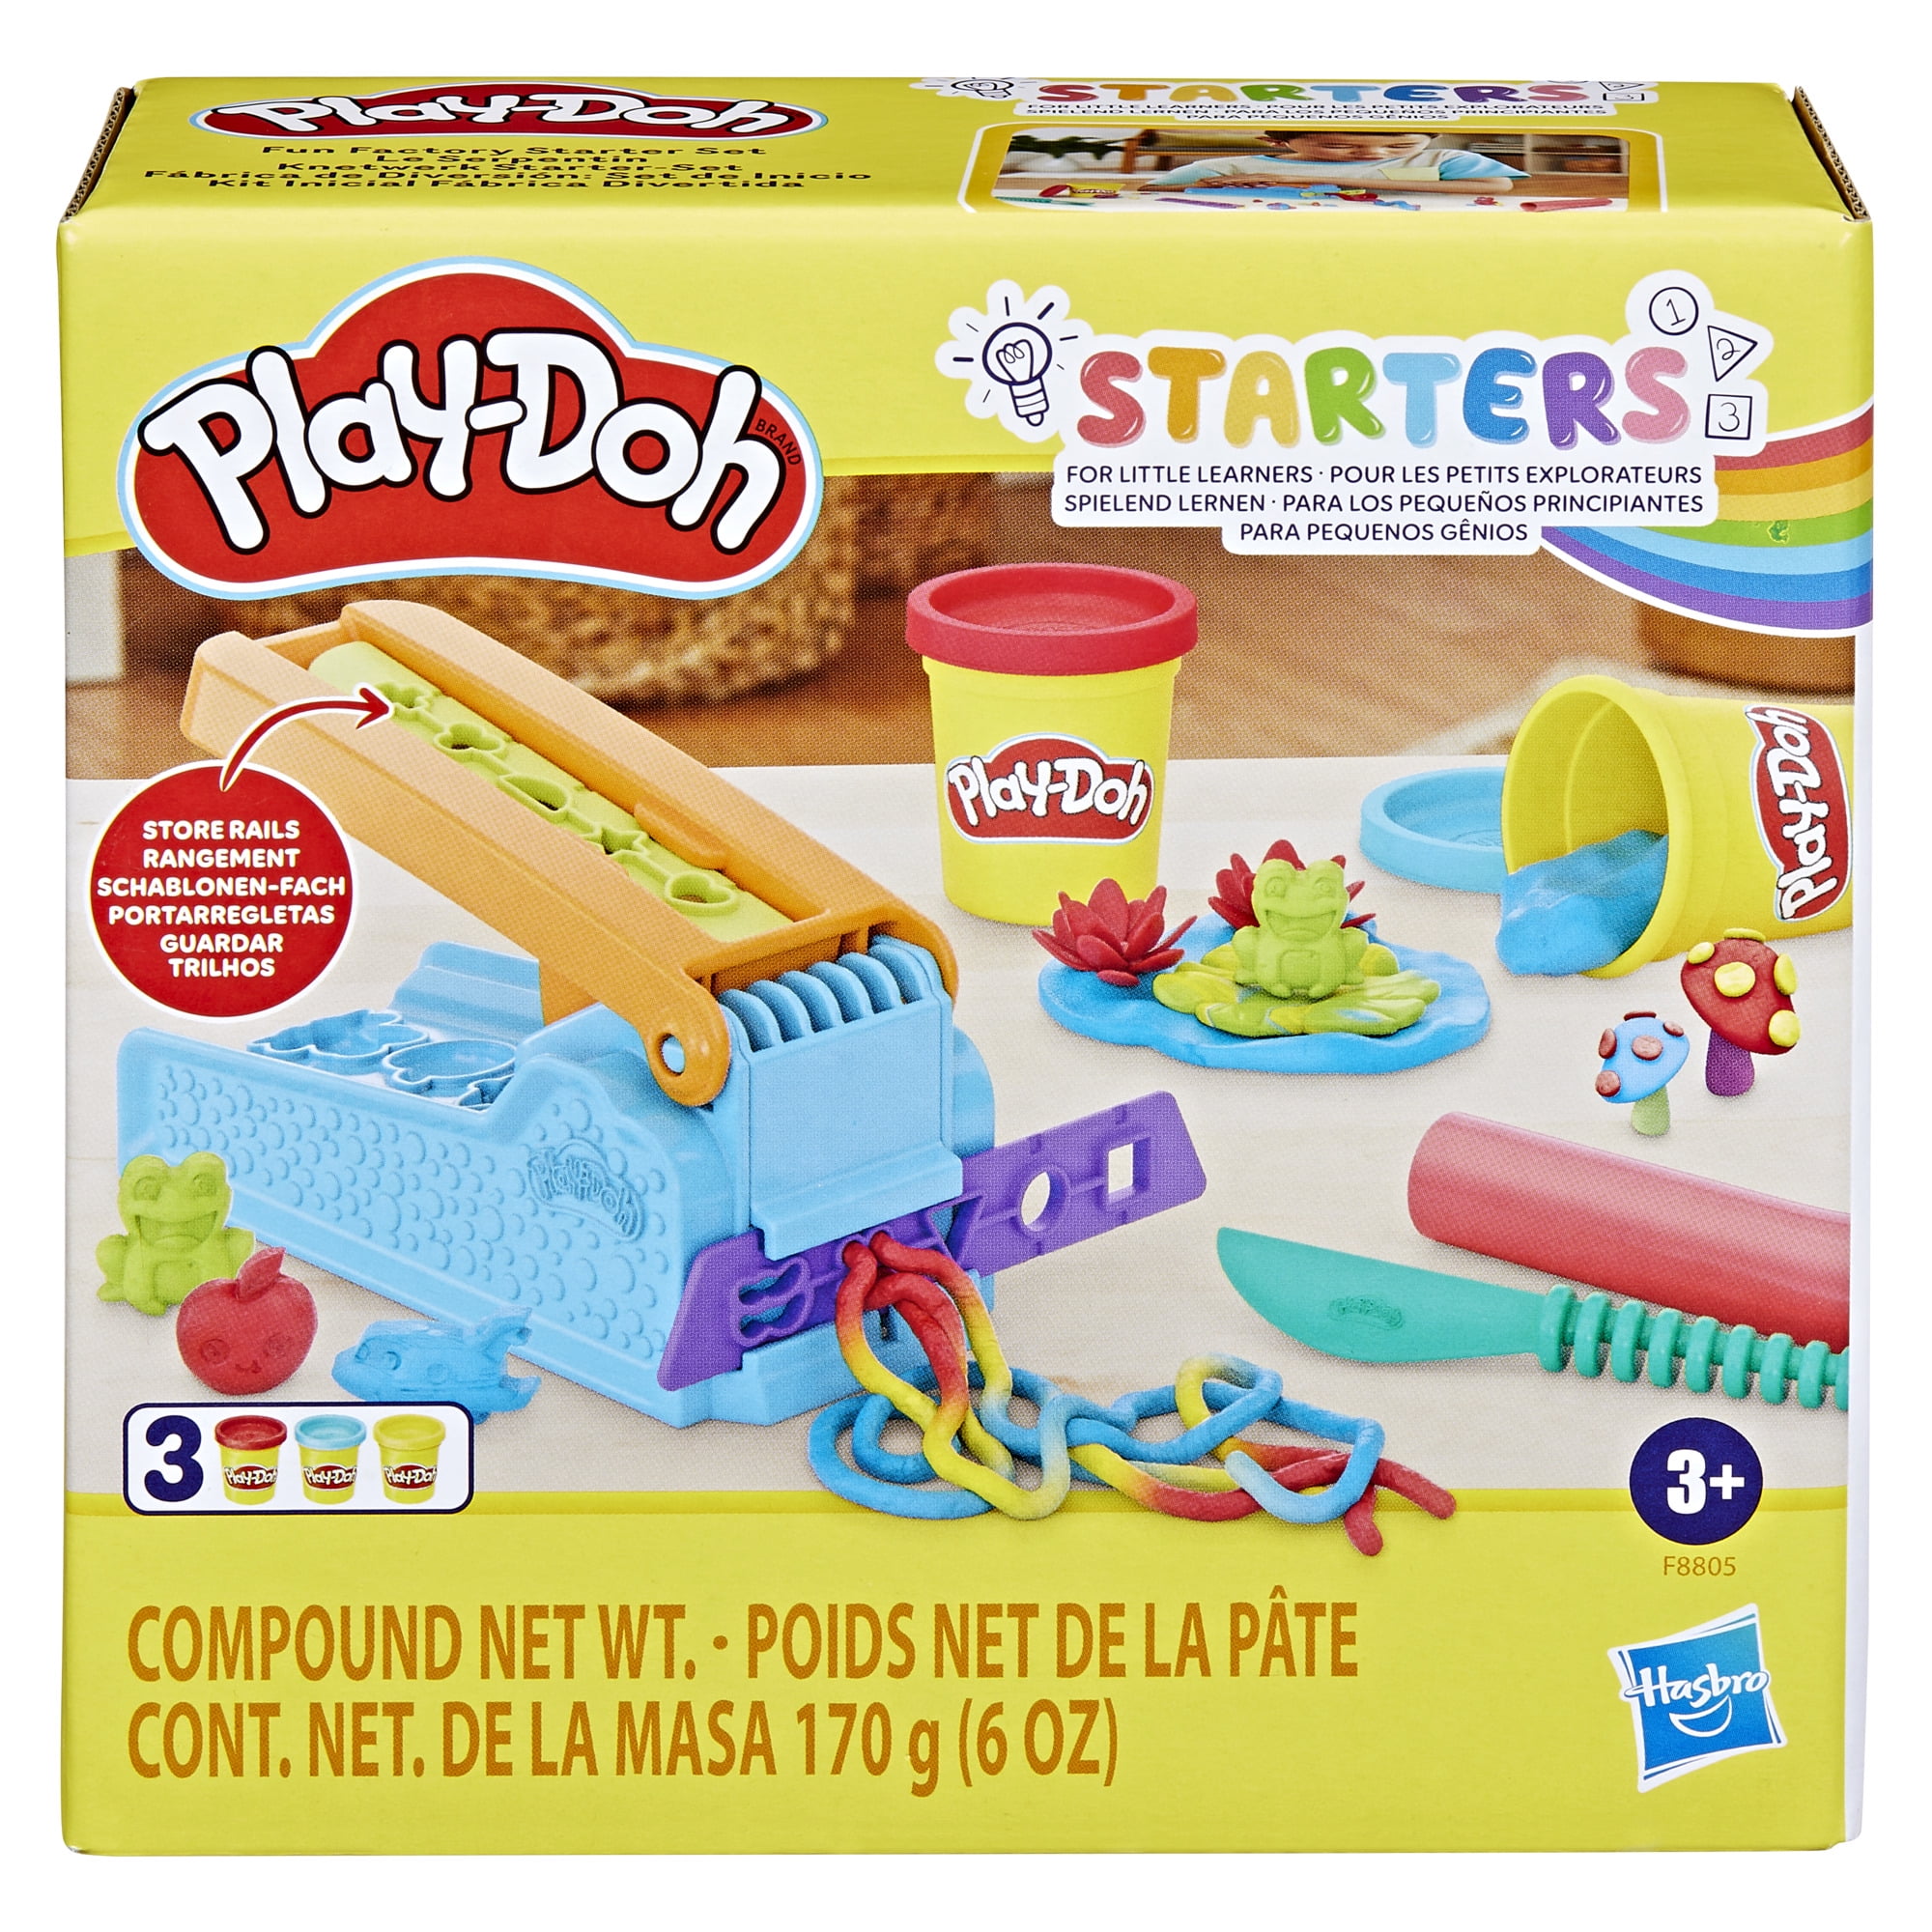 Play doh Sets! - Toys - Excelsior, Minnesota, Facebook Marketplace